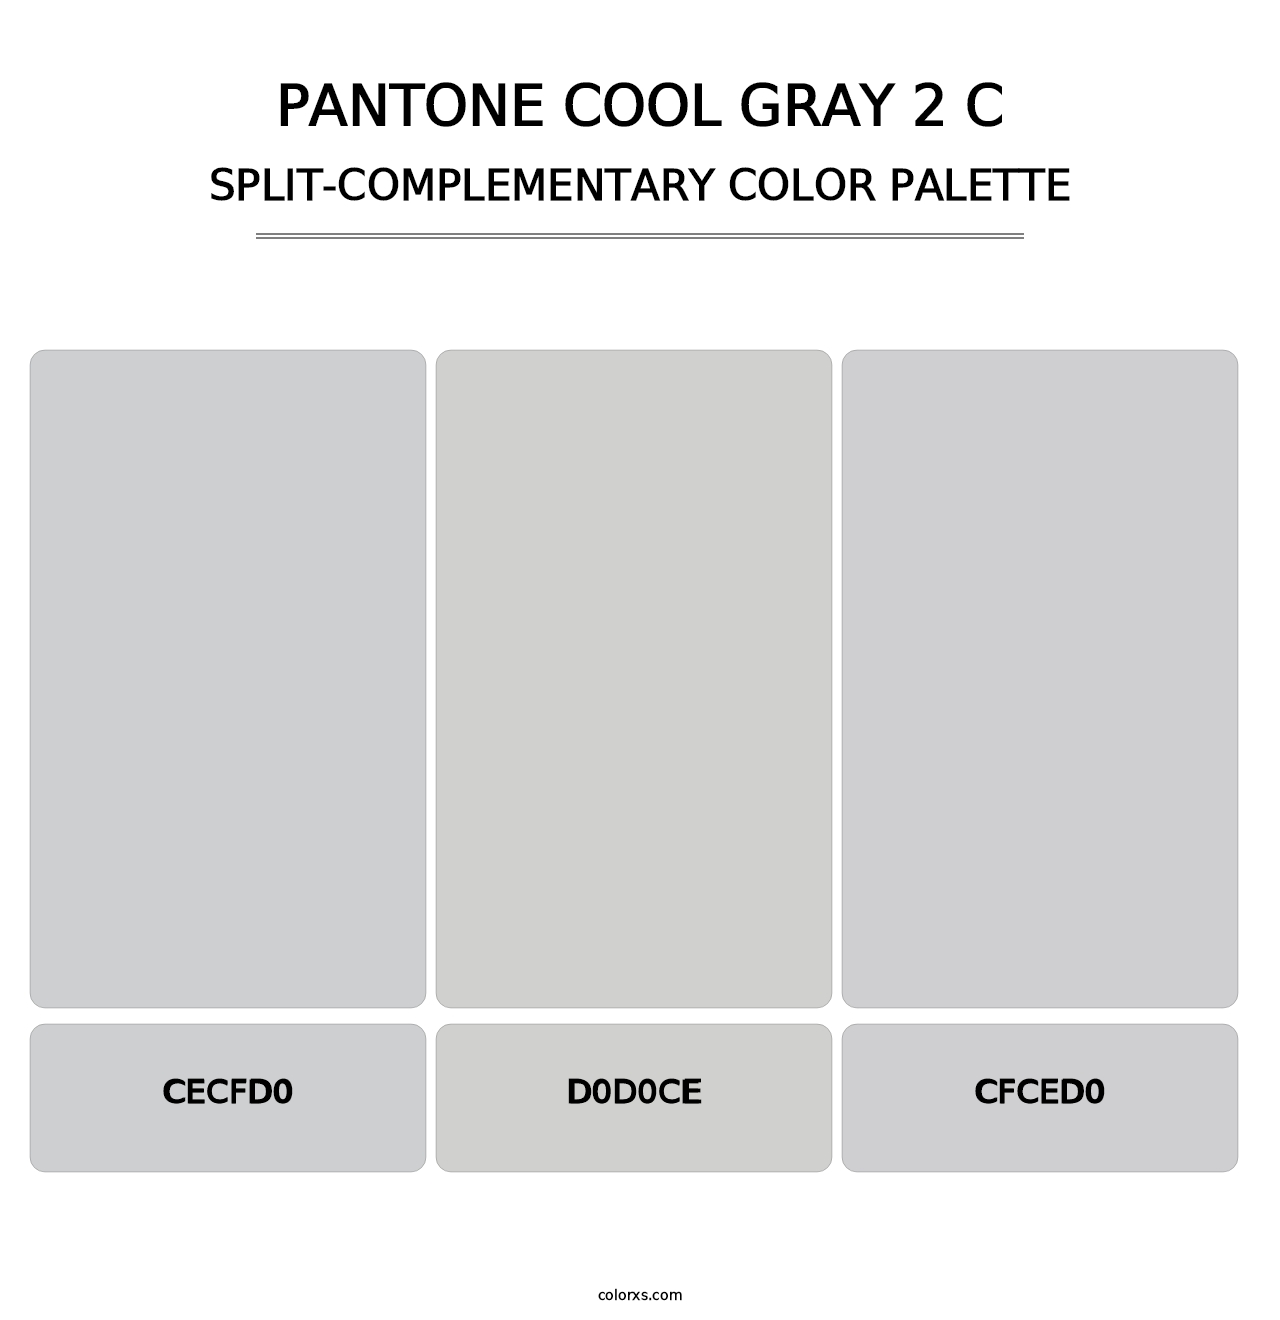 PANTONE Cool Gray 2 C - Split-Complementary Color Palette